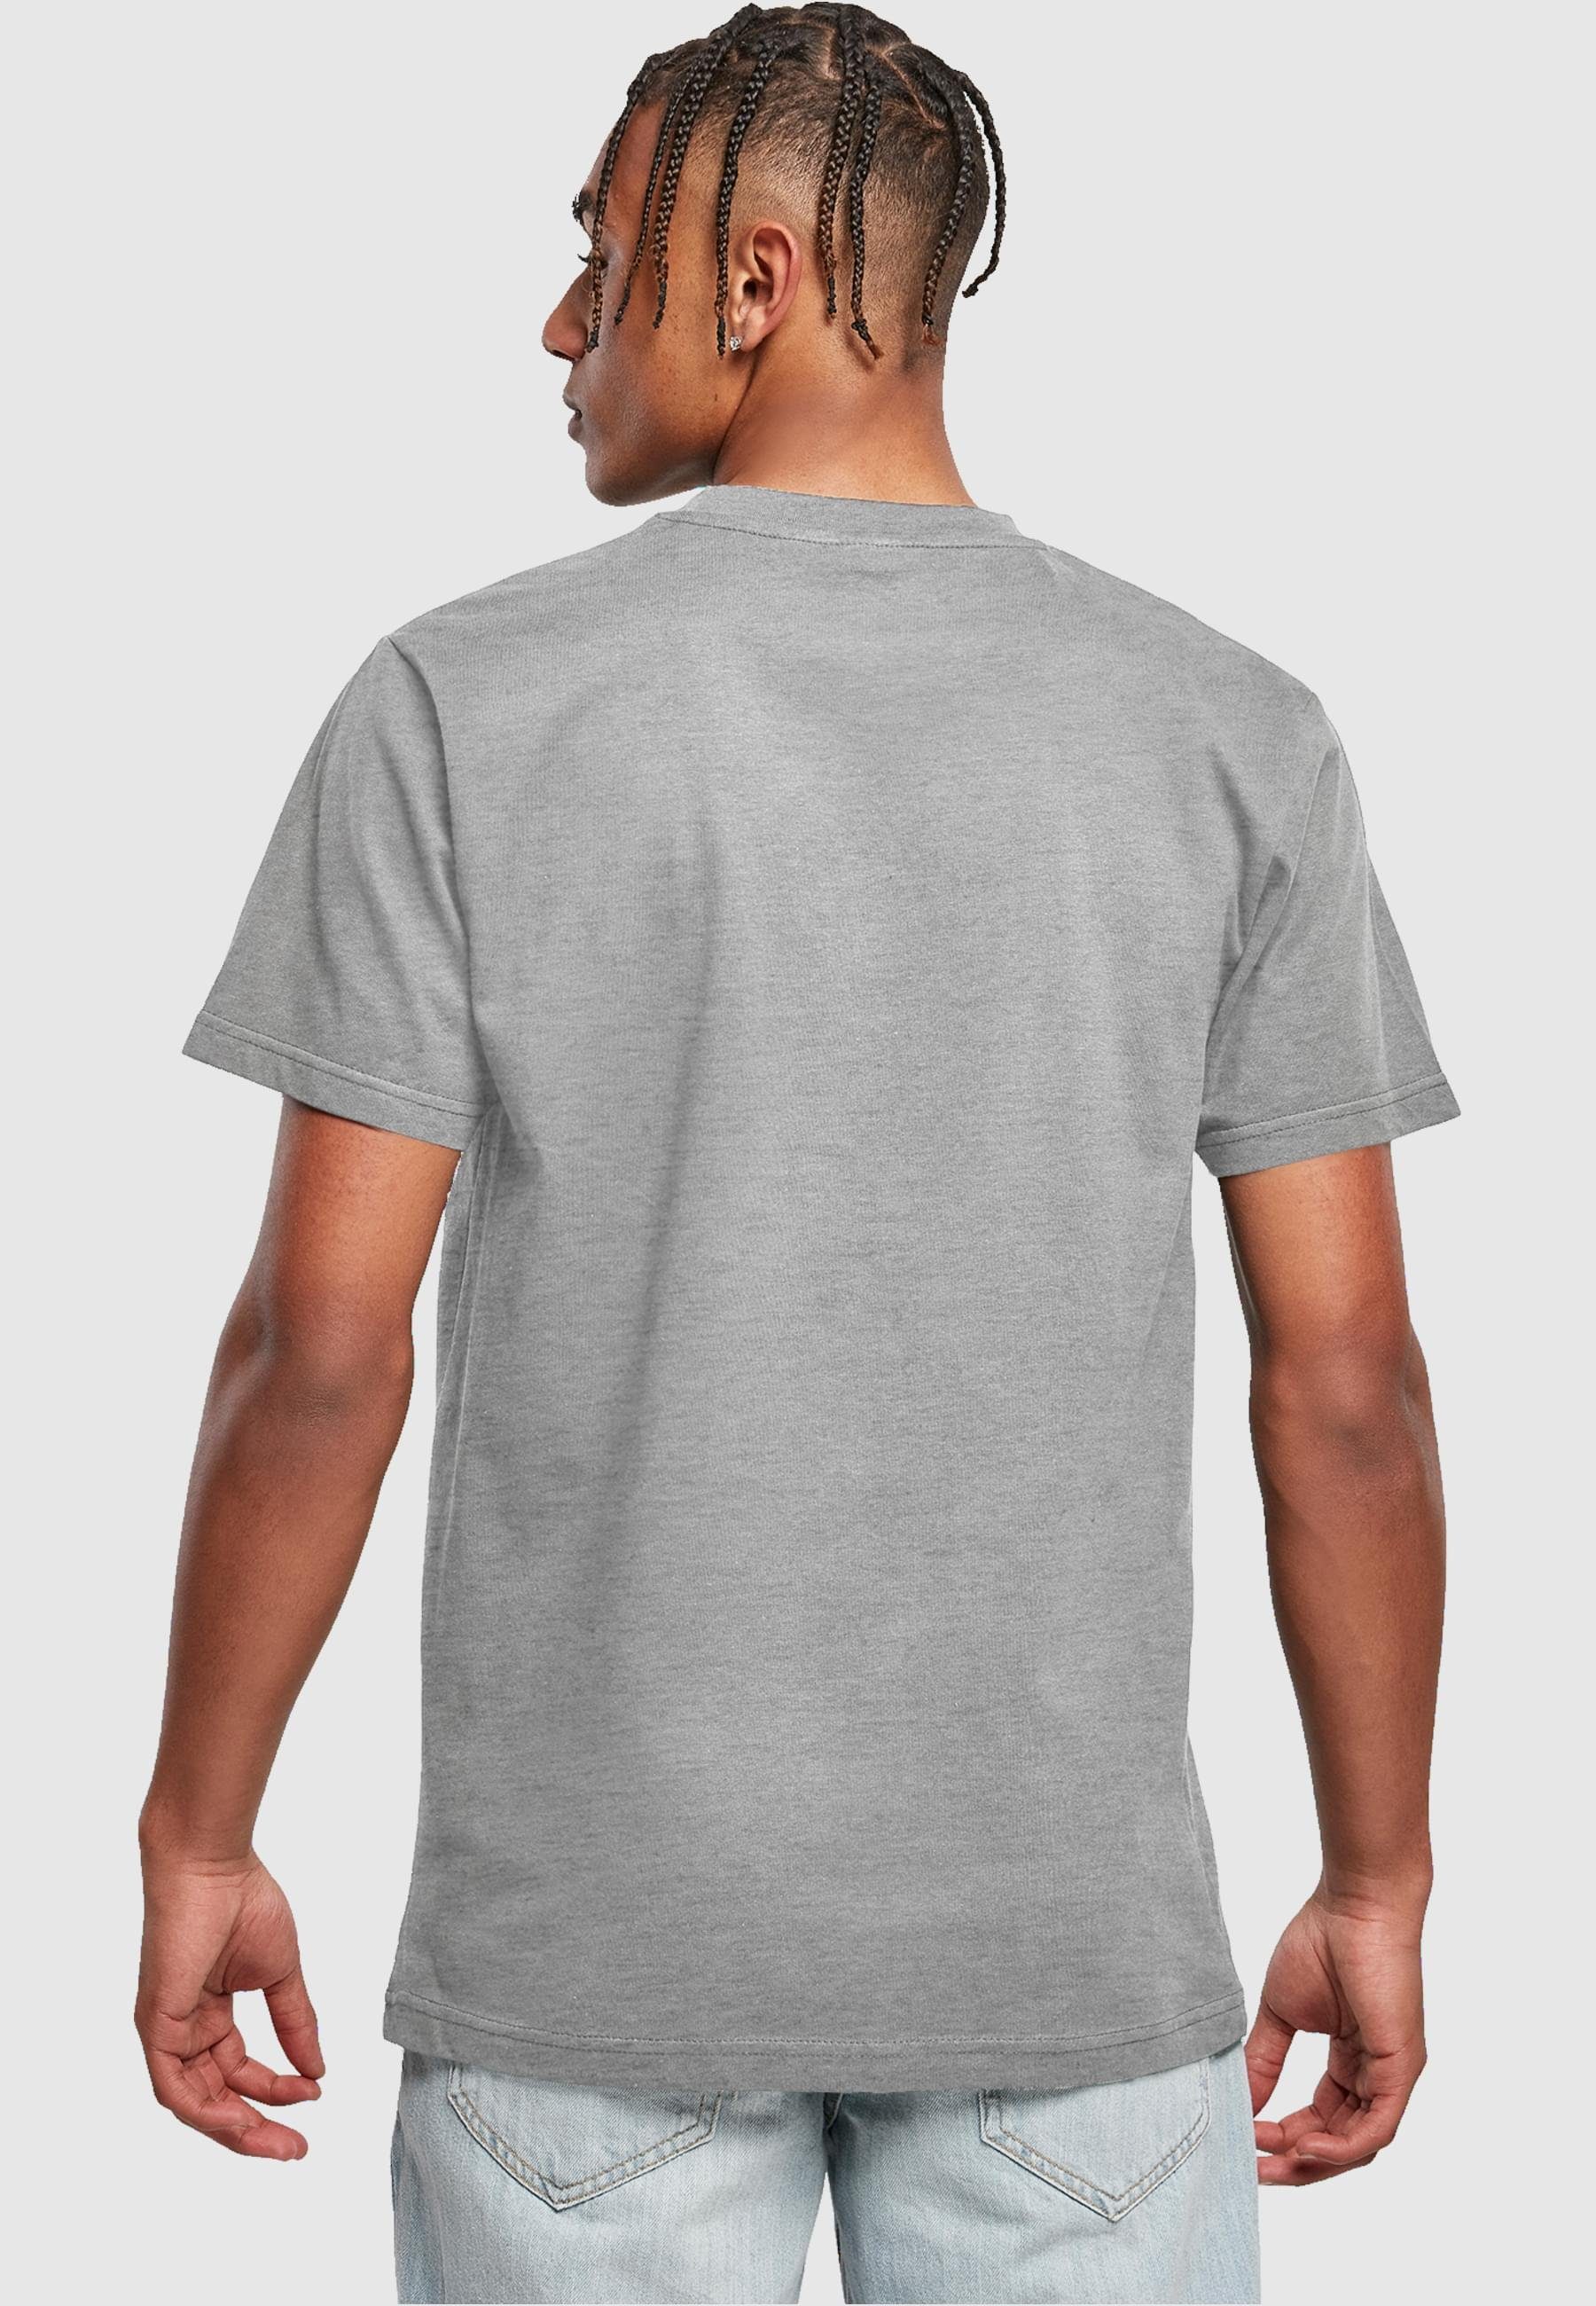 Merchcode Layla (1-tlg) T-Shirt - Herren heathergrey Limited Edition T-Shirt